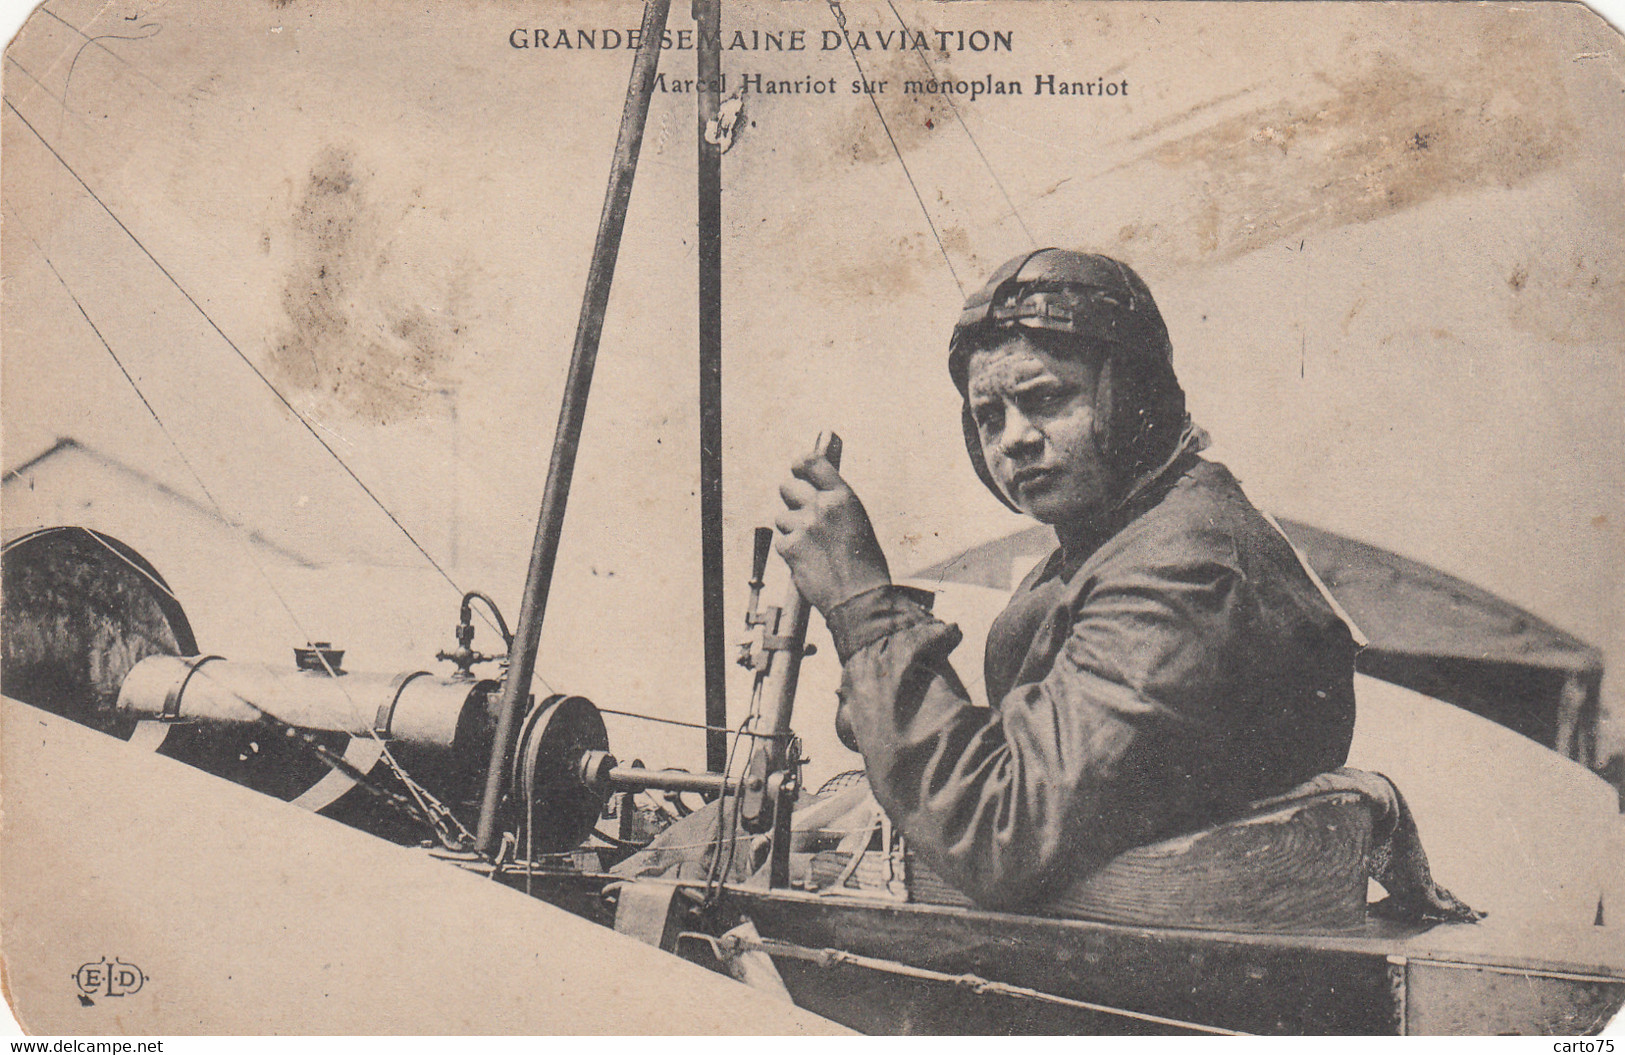 Aviation - Aviateurs - Grande Semaine D'Aviation - Aviateur Marcel Hanriot - Monoplan Hanriot - Aviateurs